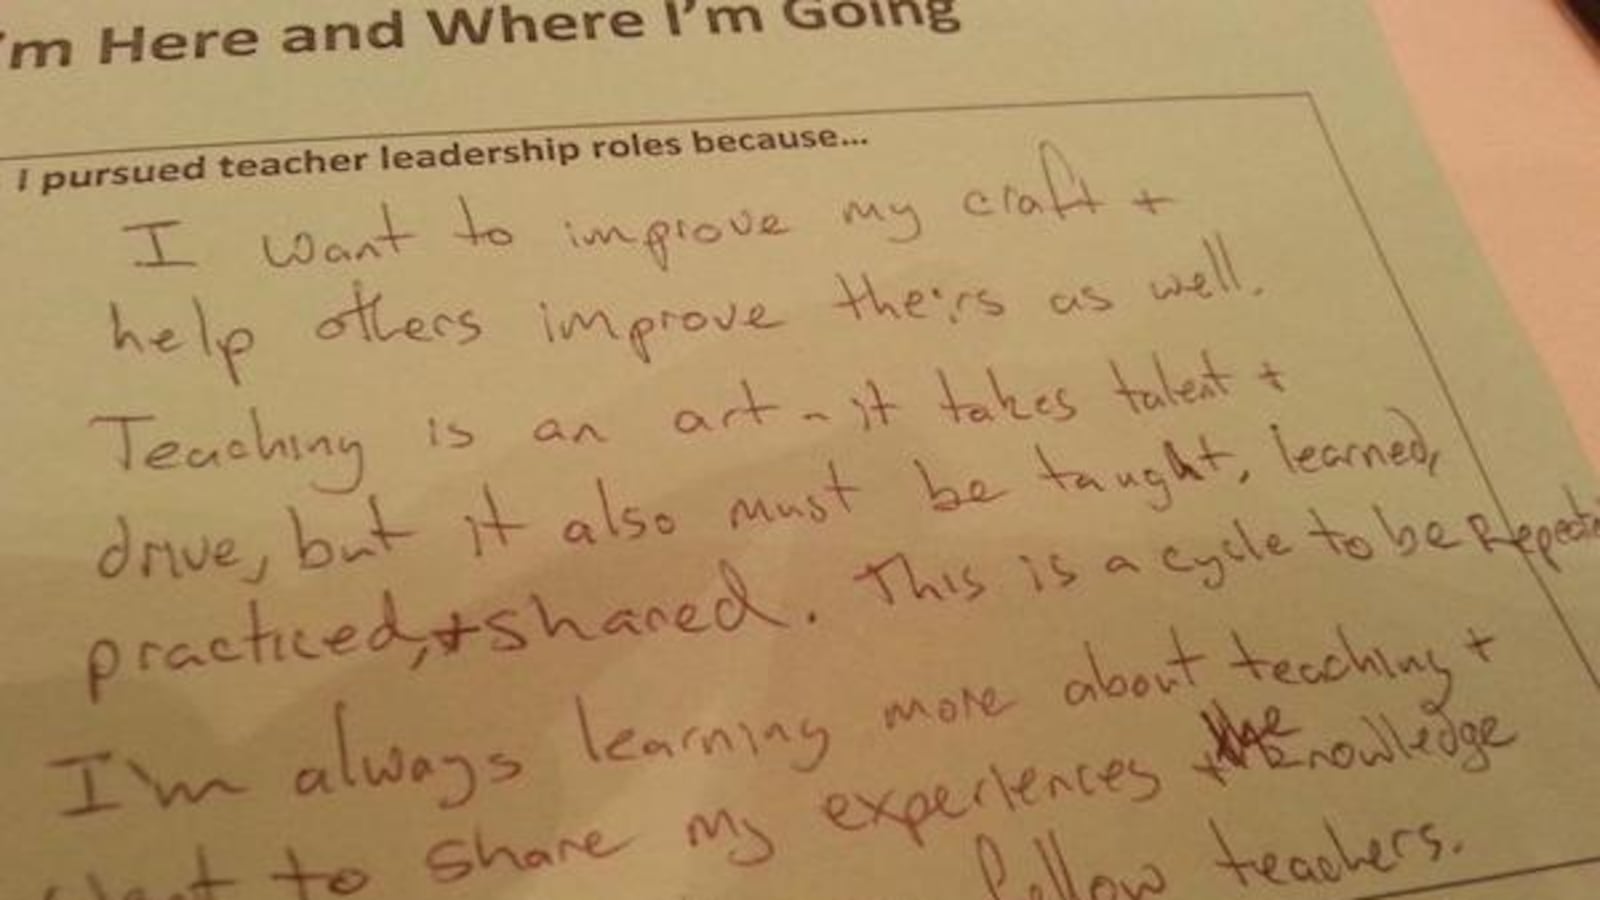 A teacher leader's tweet from the Teach to Lead summit in Denver.